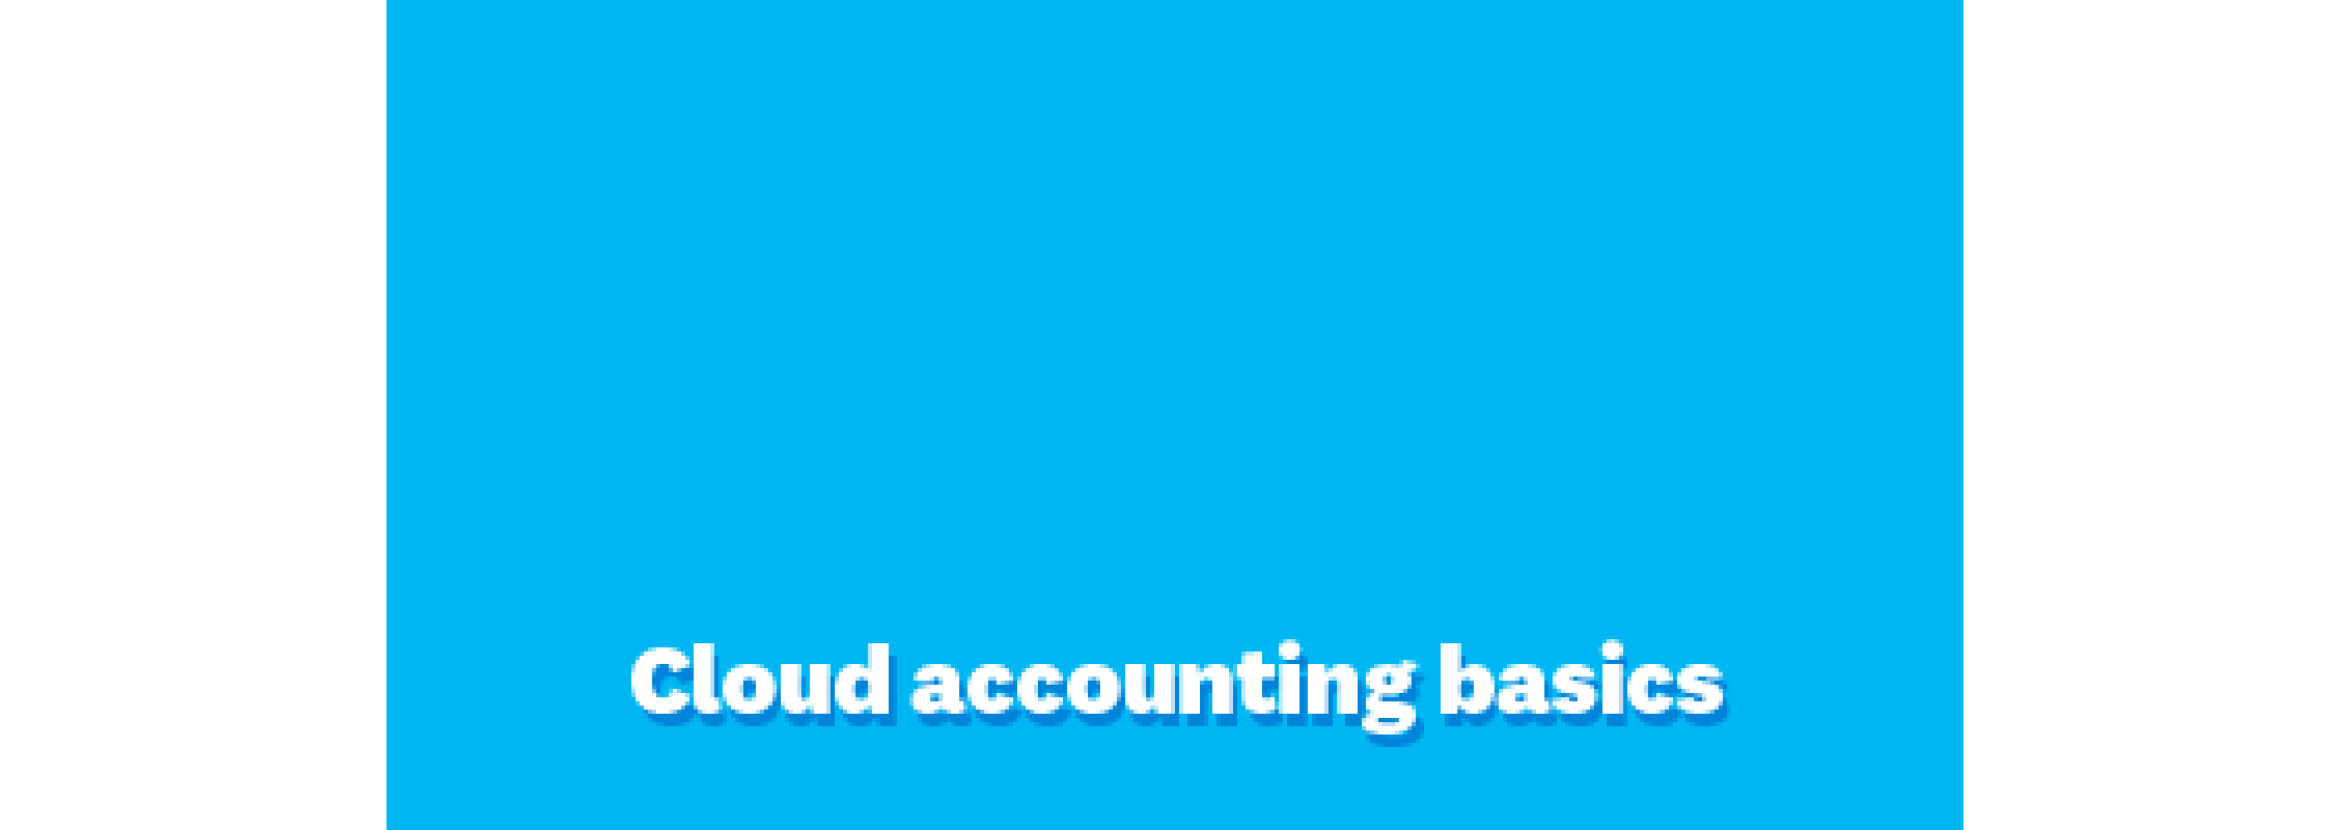 Cloud accounting basics